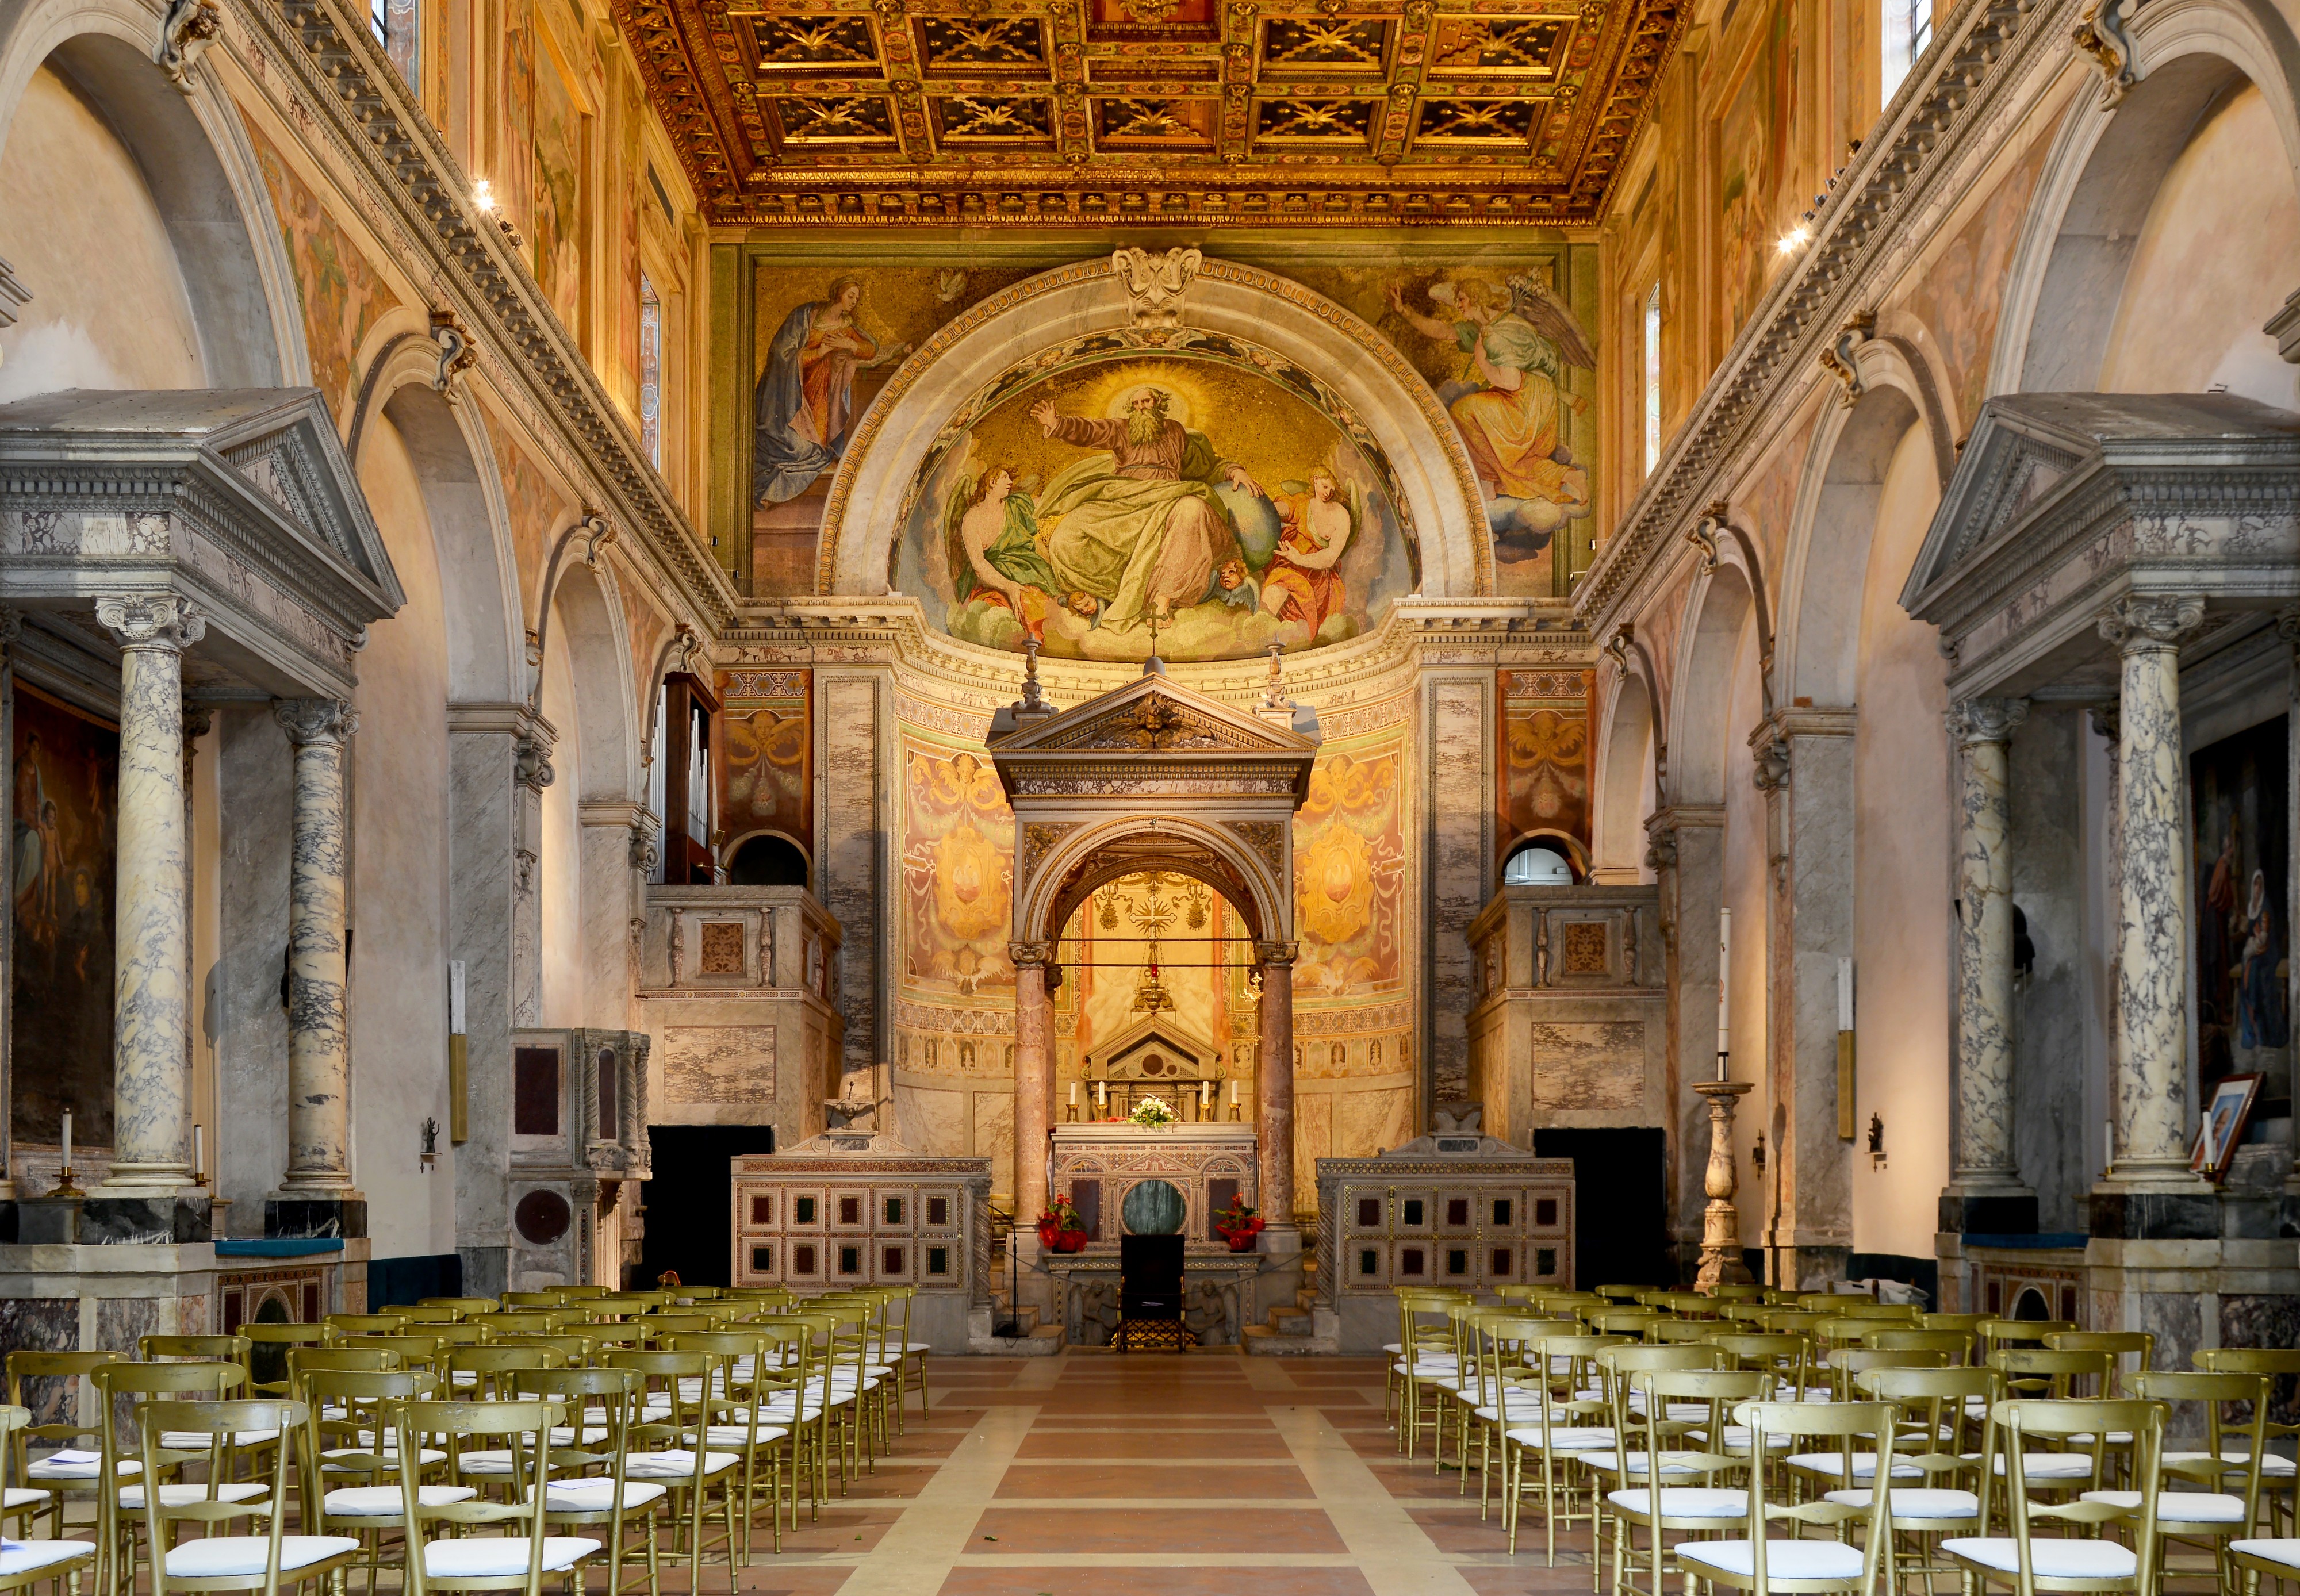 San Cesareo de Appia (Rome), interior